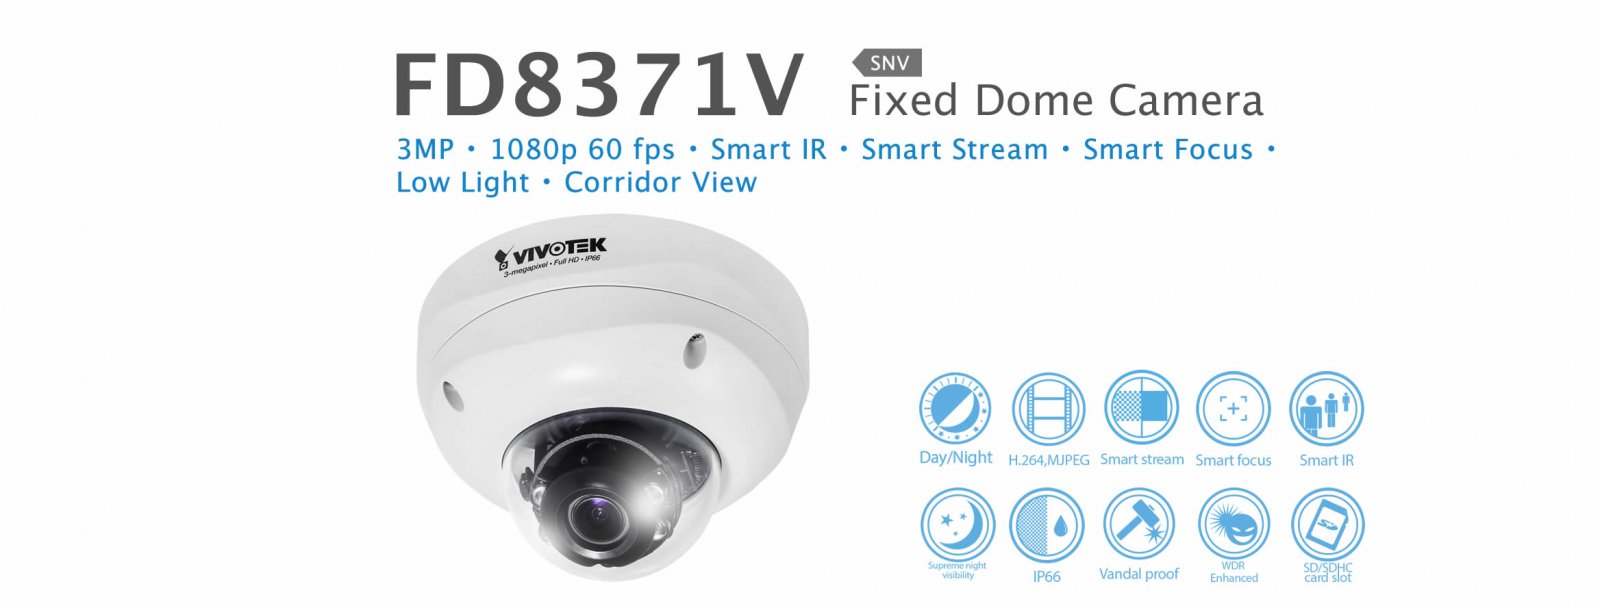 FD8371V. Vivotek Fixed Dome Camera